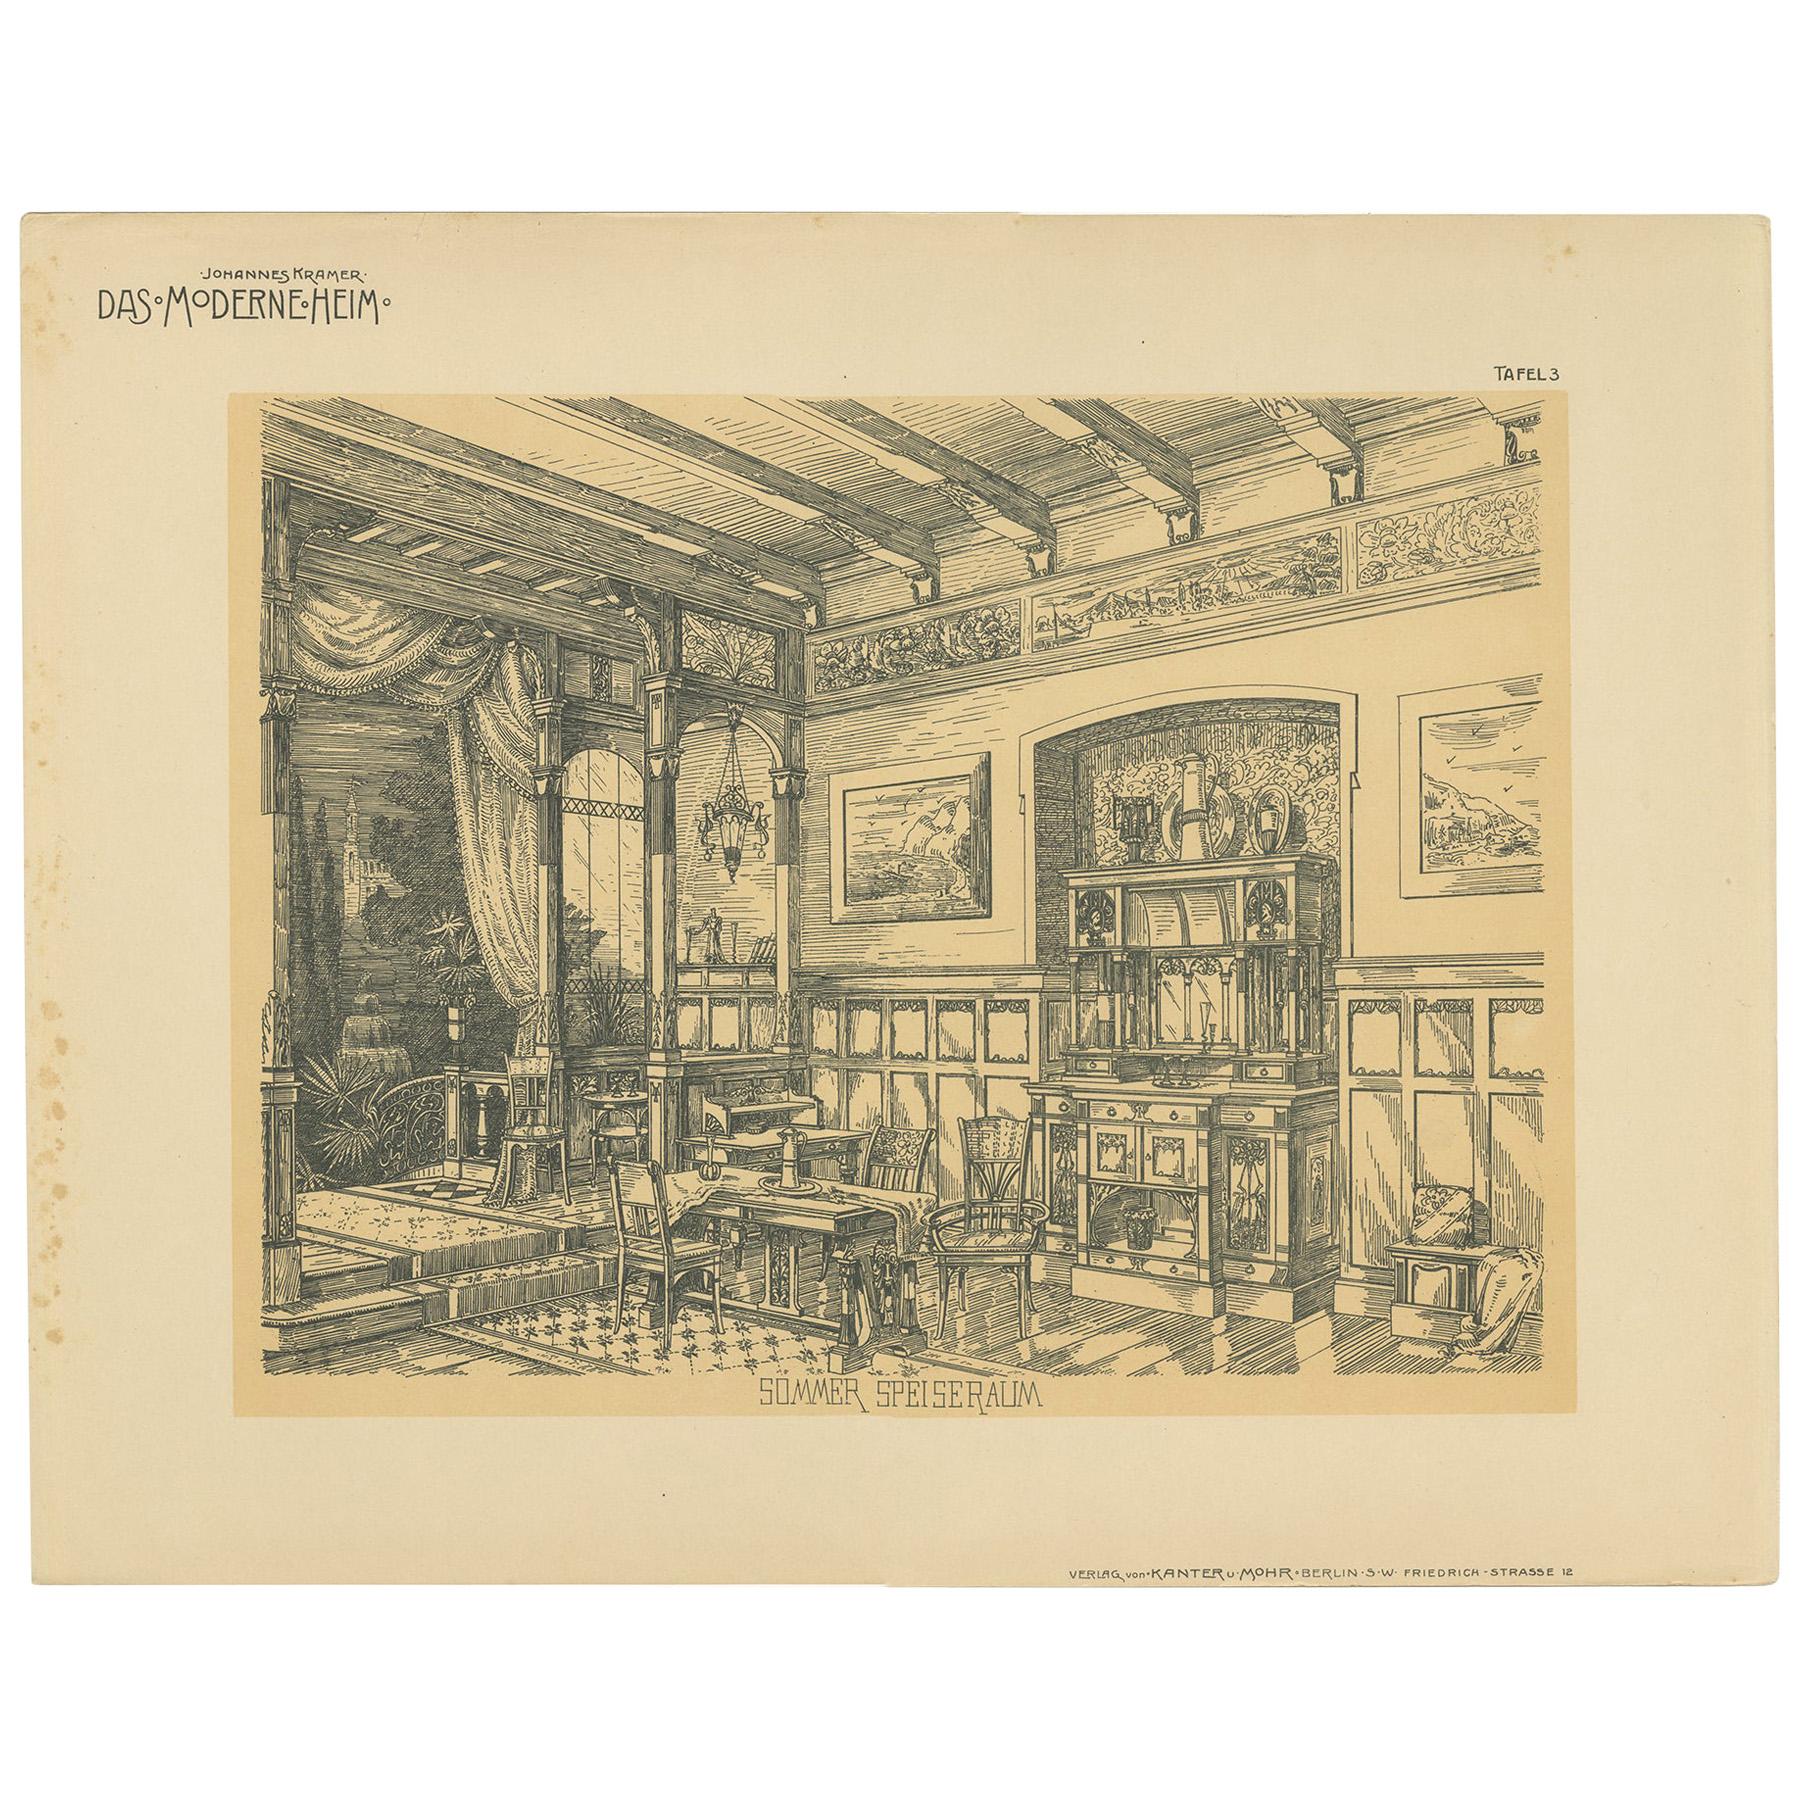 Pl. 3 Antique Print of a Summer Dining Room by Kramer 'circa 1910'